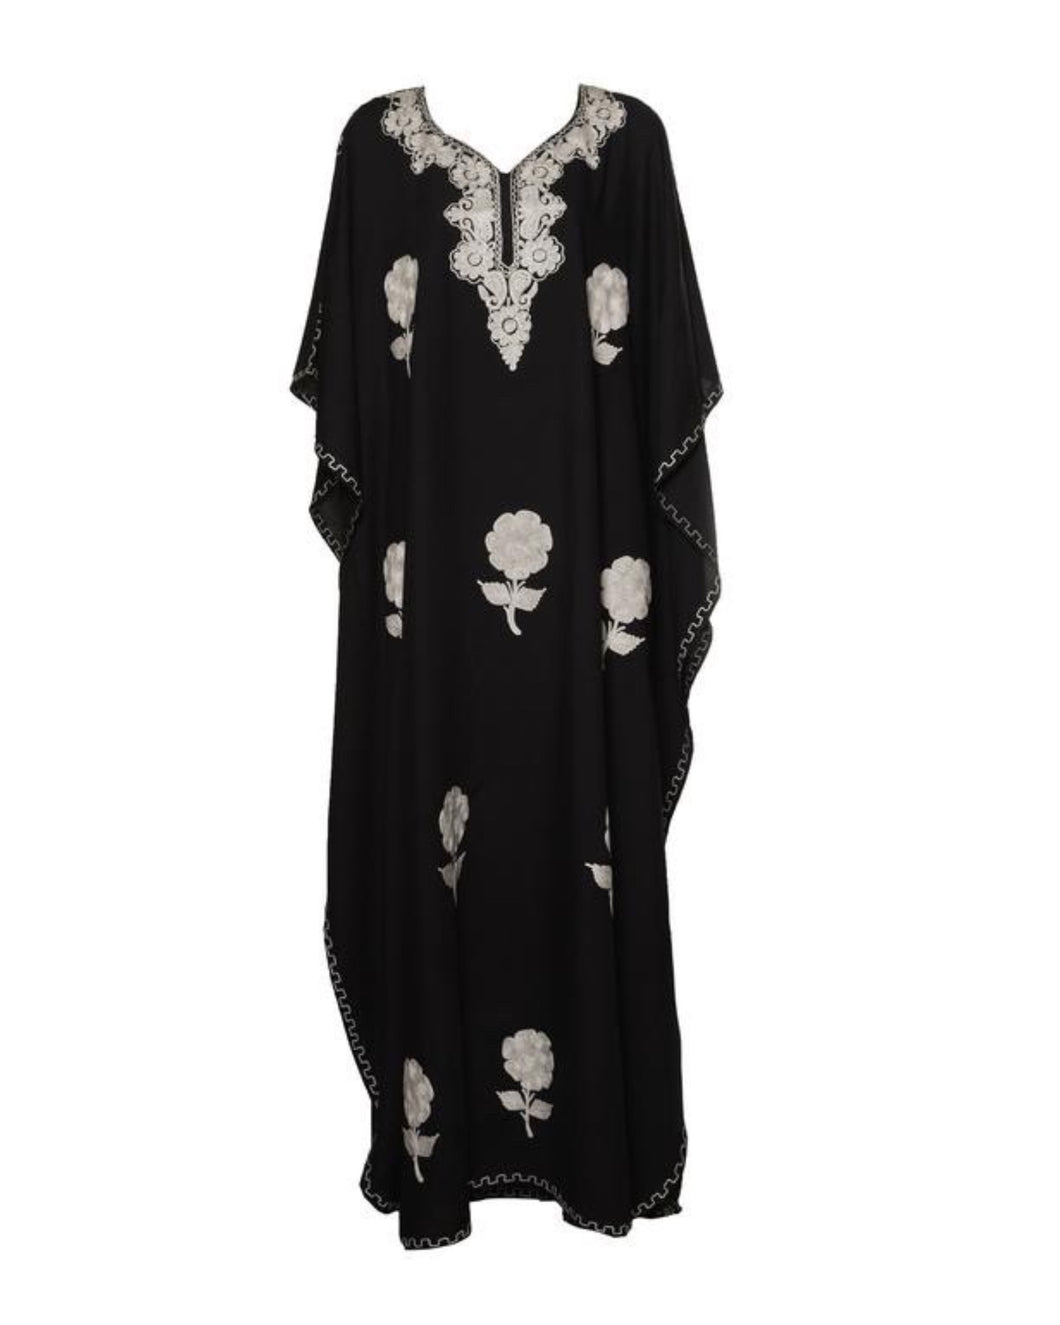 Kaftan Dress (Black with White Flowers)